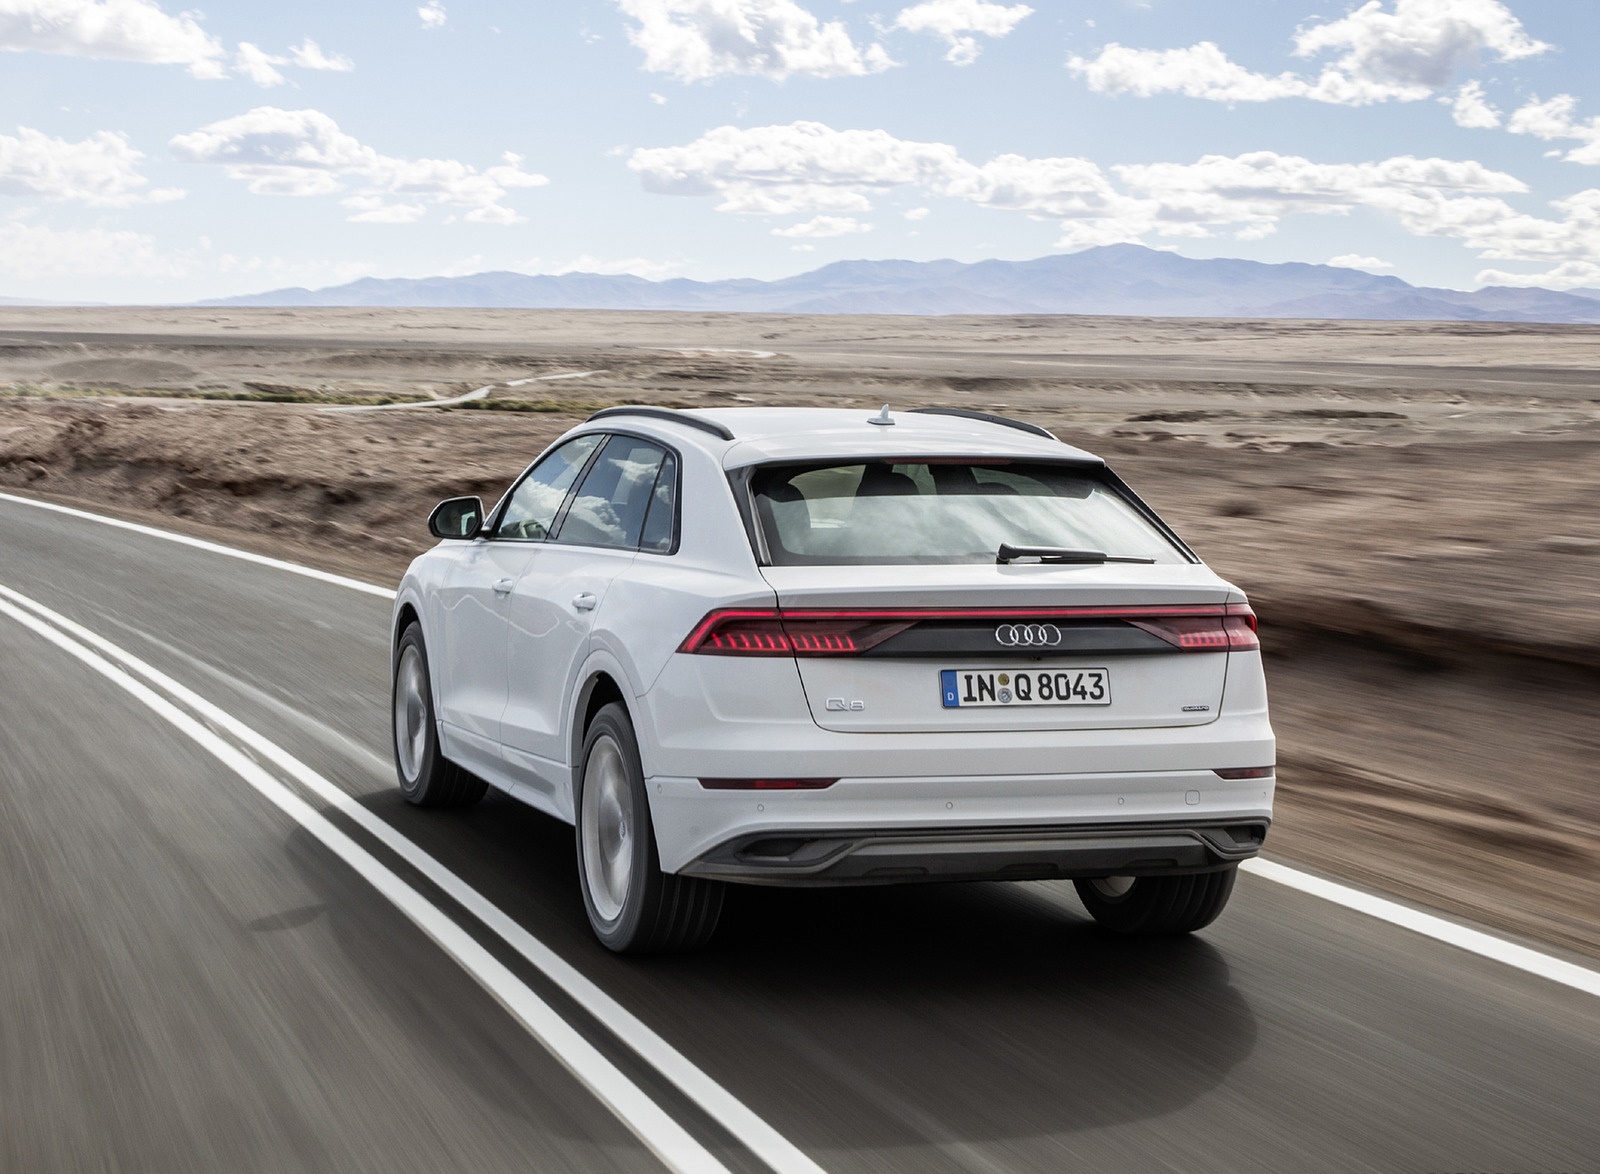 2019 Audi Q8 (Color: Glacier White) Rear Wallpapers #210 of 260